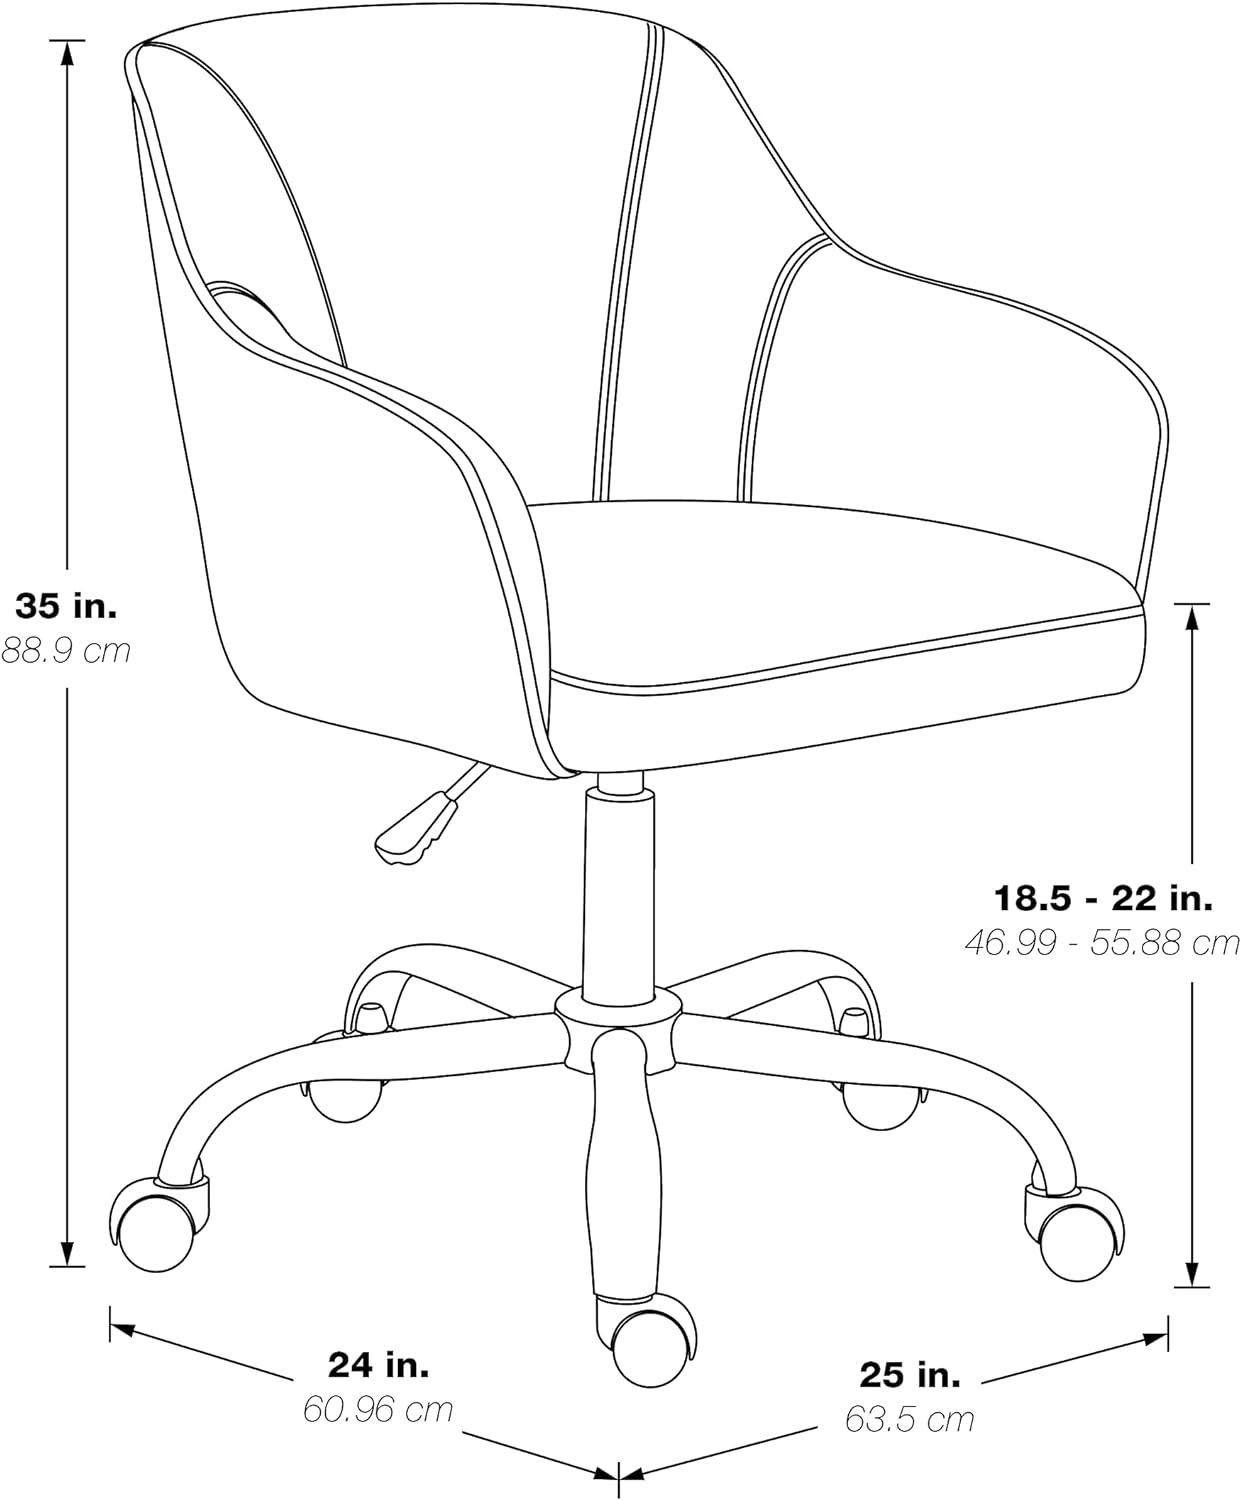 Atlantic Blue Velvet Fabric Swivel Task Chair with Polished Chrome Base